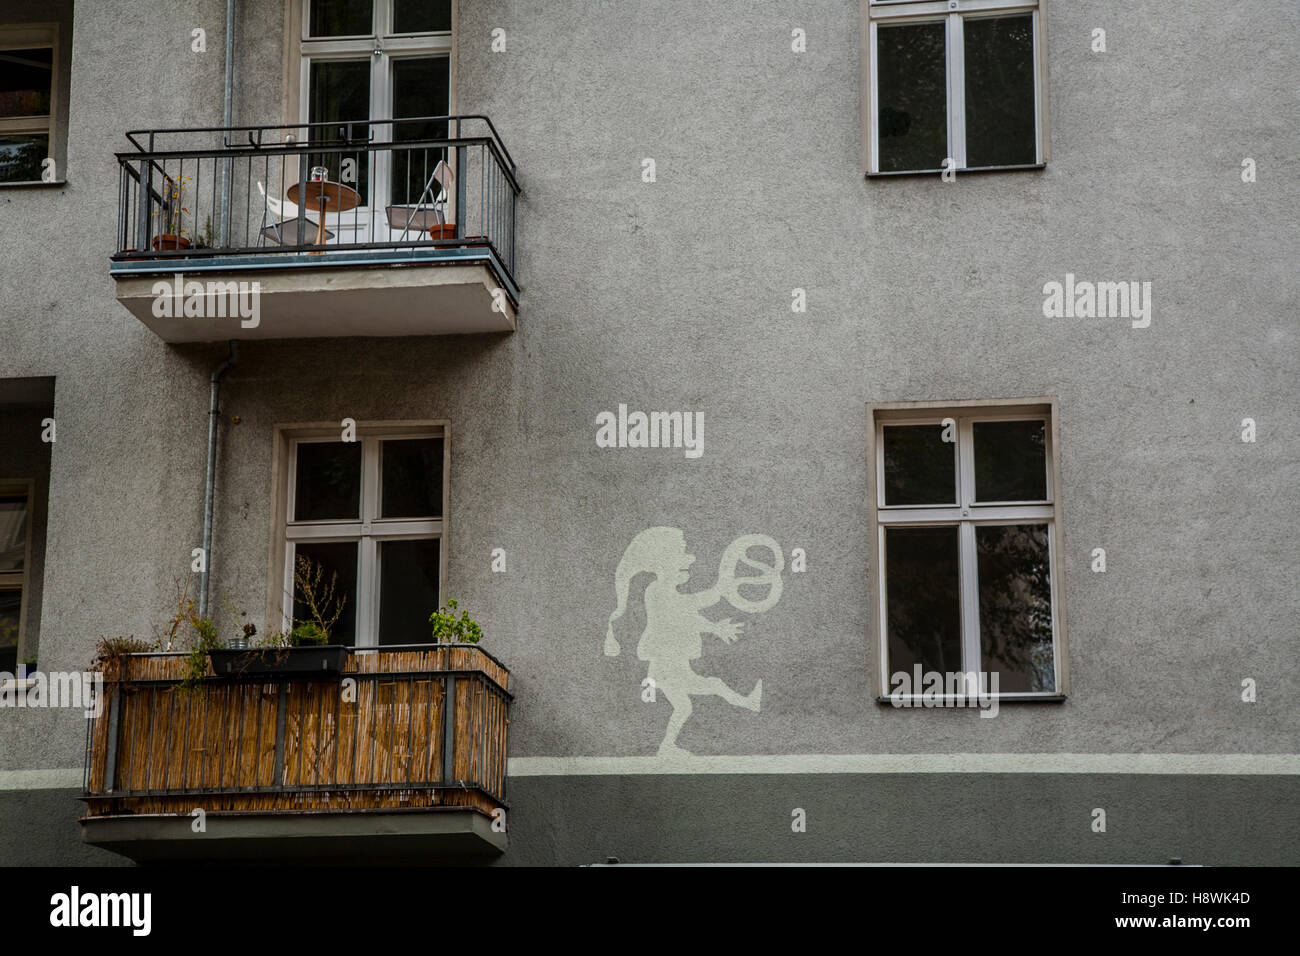 Berlin Graffiti 2016 Stockfoto